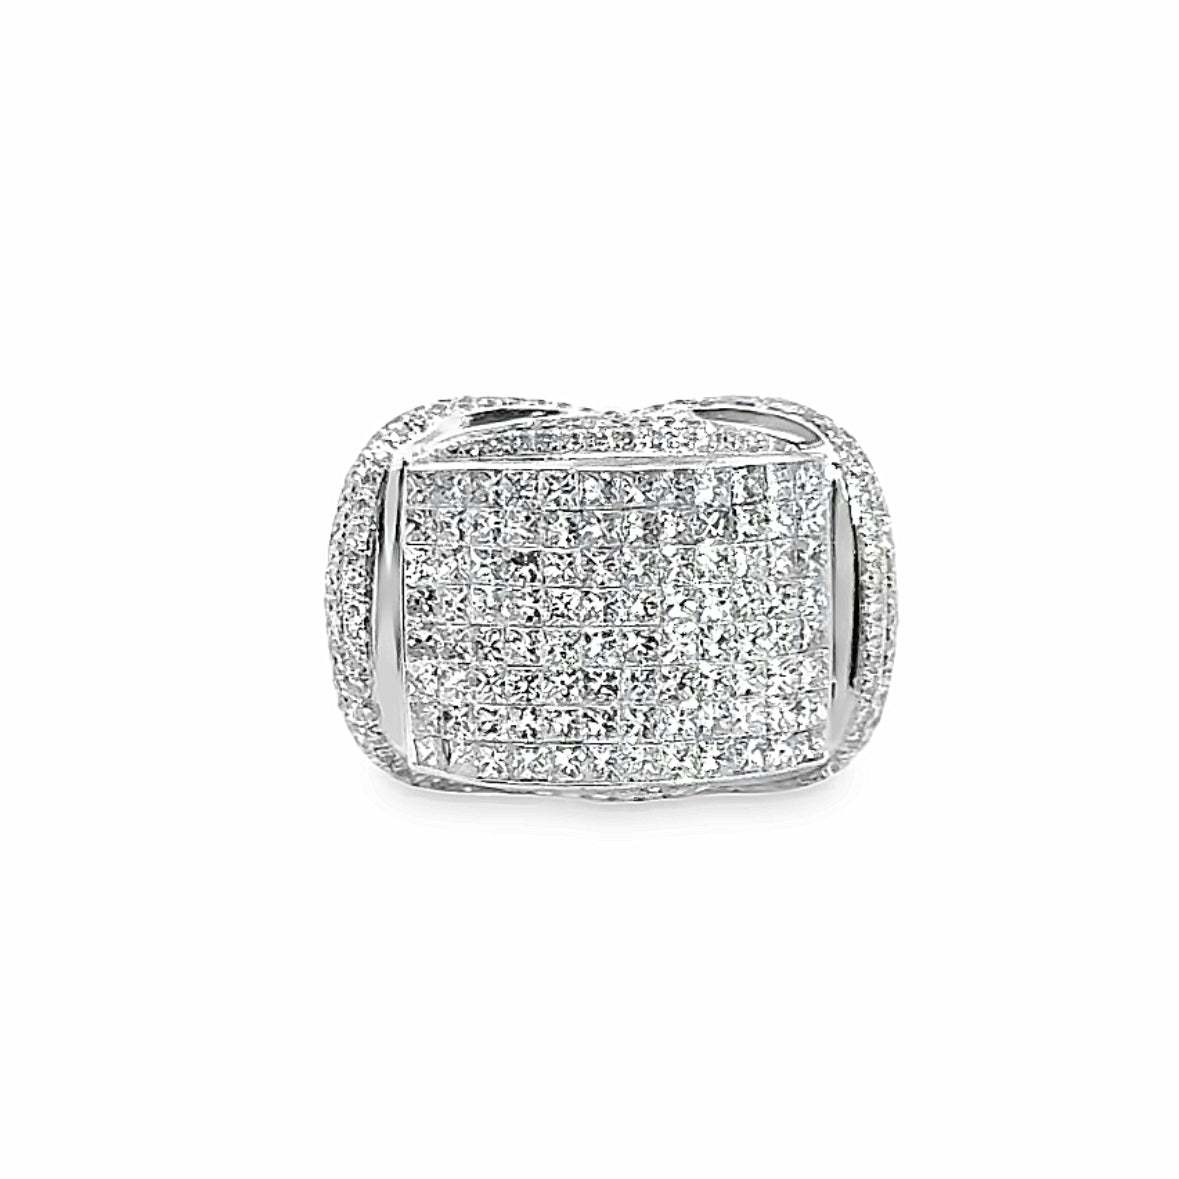 Stunning 14K White Gold 5.84 Carats Diamond ring